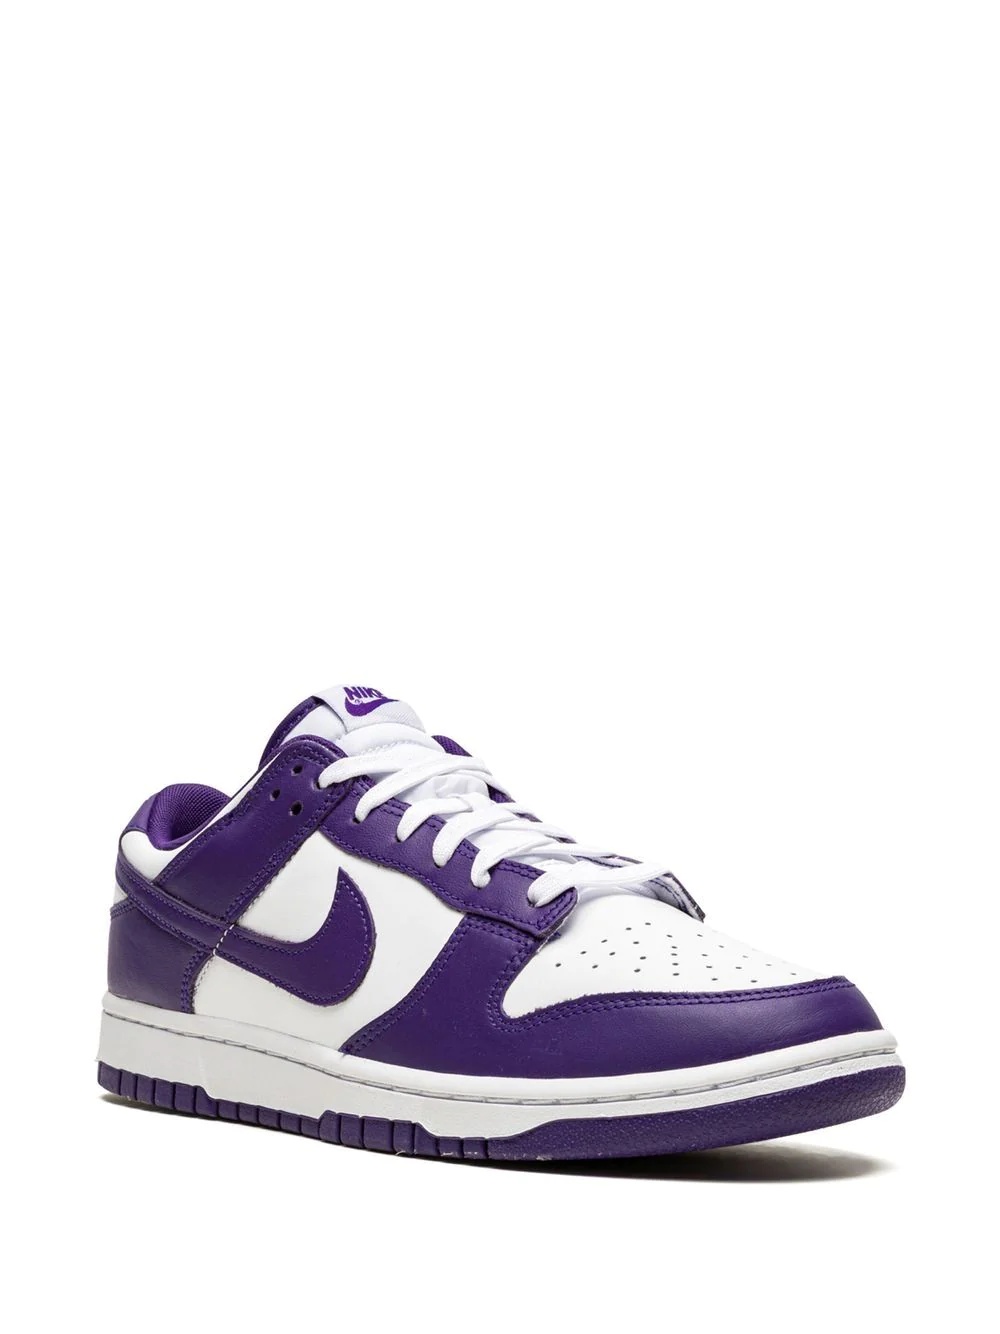 Dunk Low "Court Purple" sneakers - 2